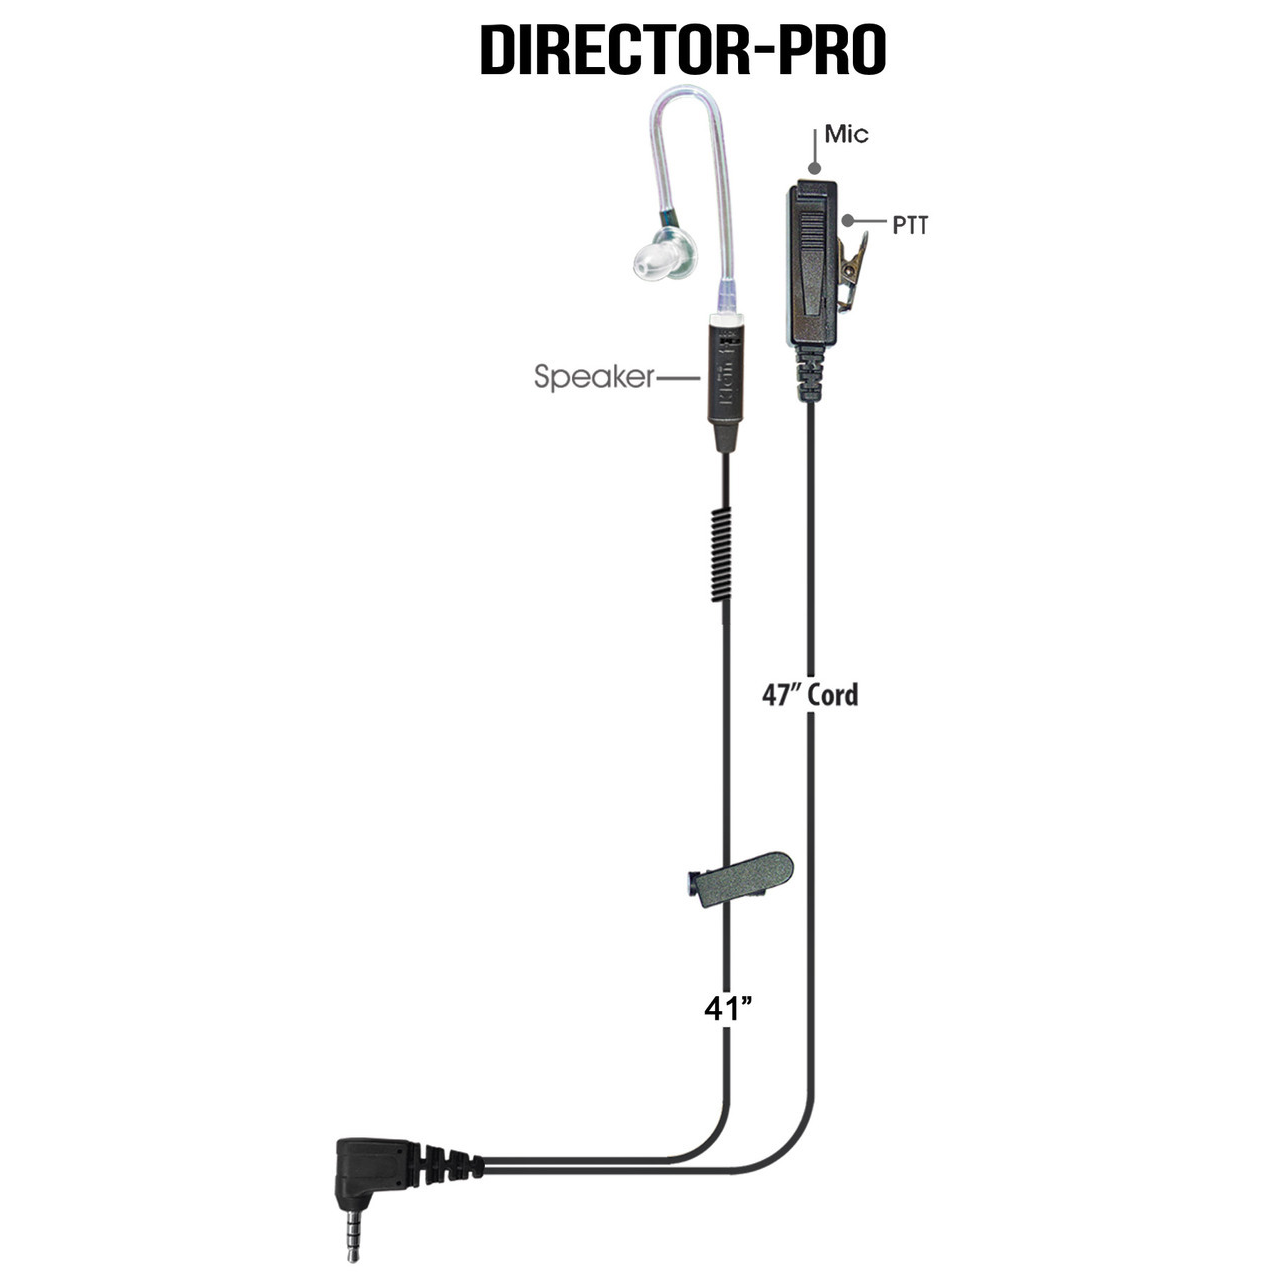 Director-PRO 2-Wire Surveillance Kit for BBGR [[product_type]] kleinelectronics.com 89.95